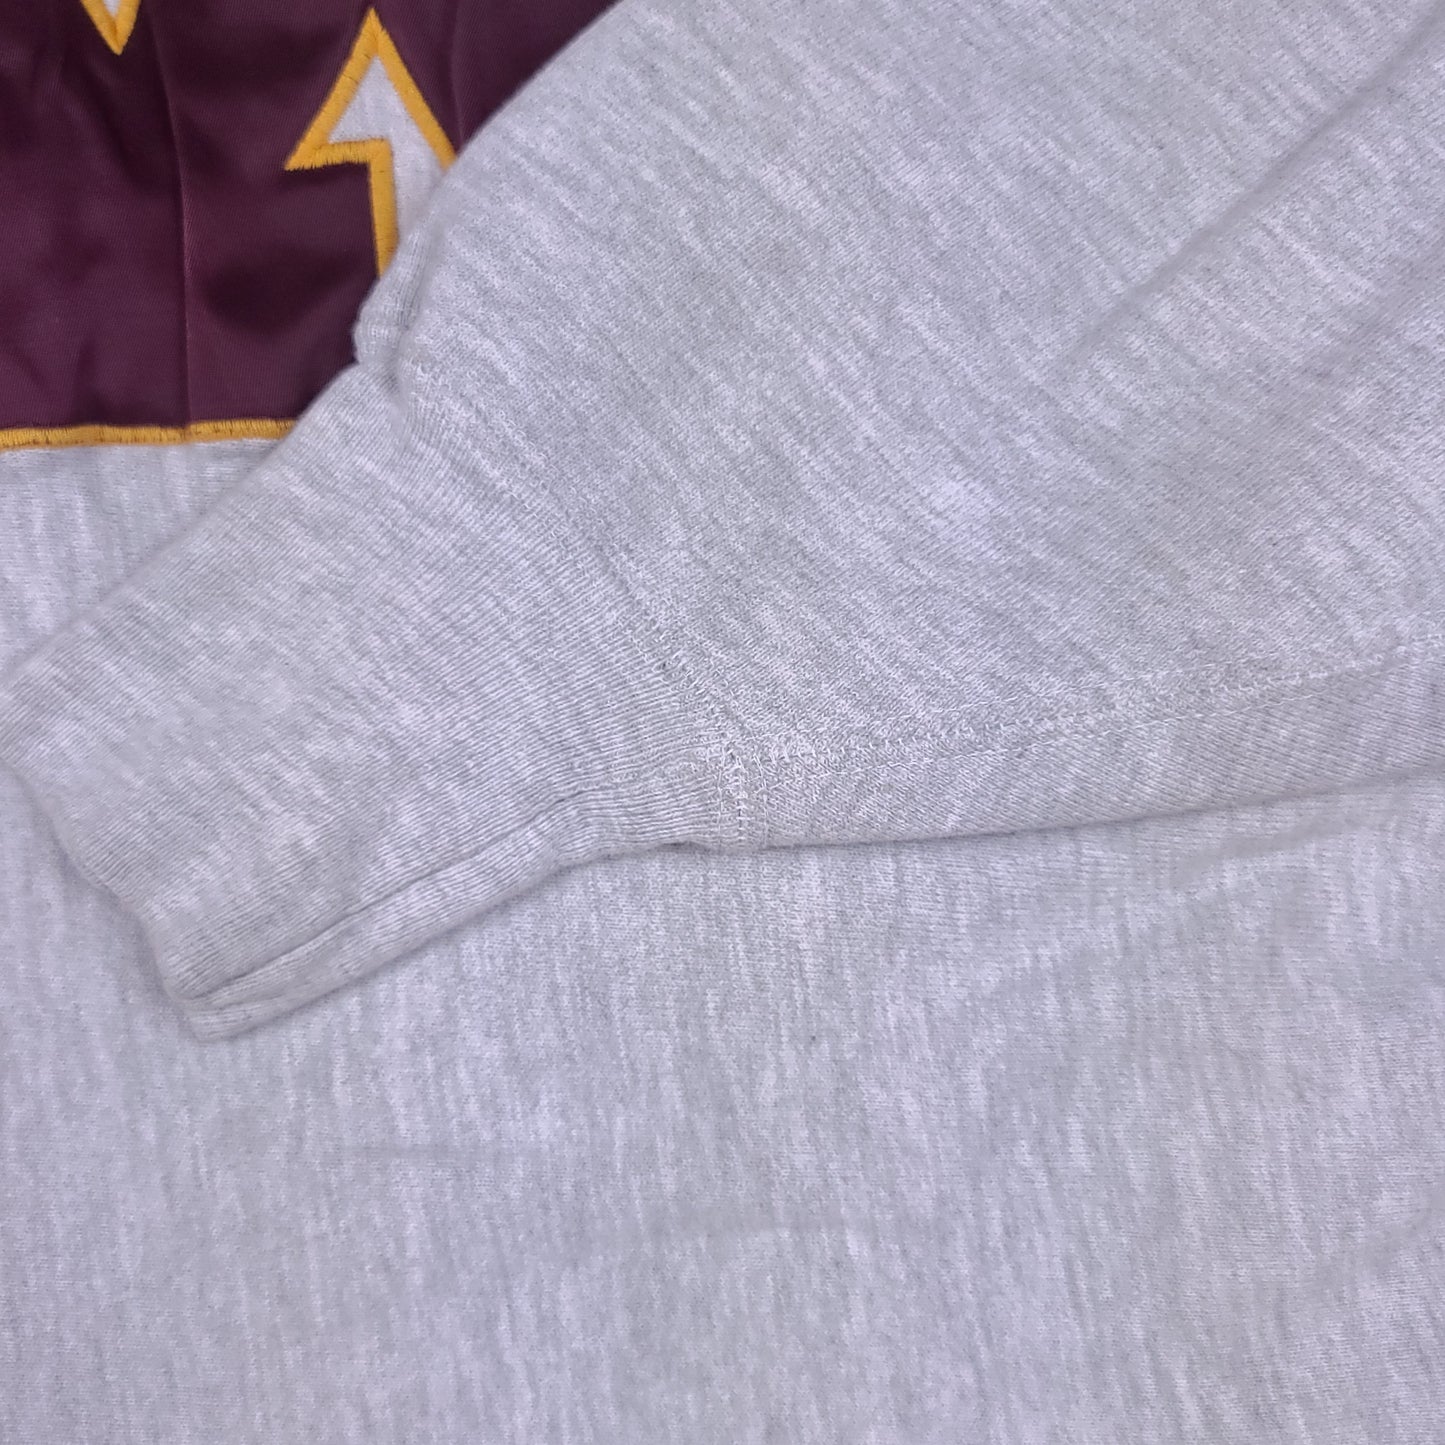 University of Minnesota Golden Gophers Cropped Gray Champion Reverse Weave Sweatshirt